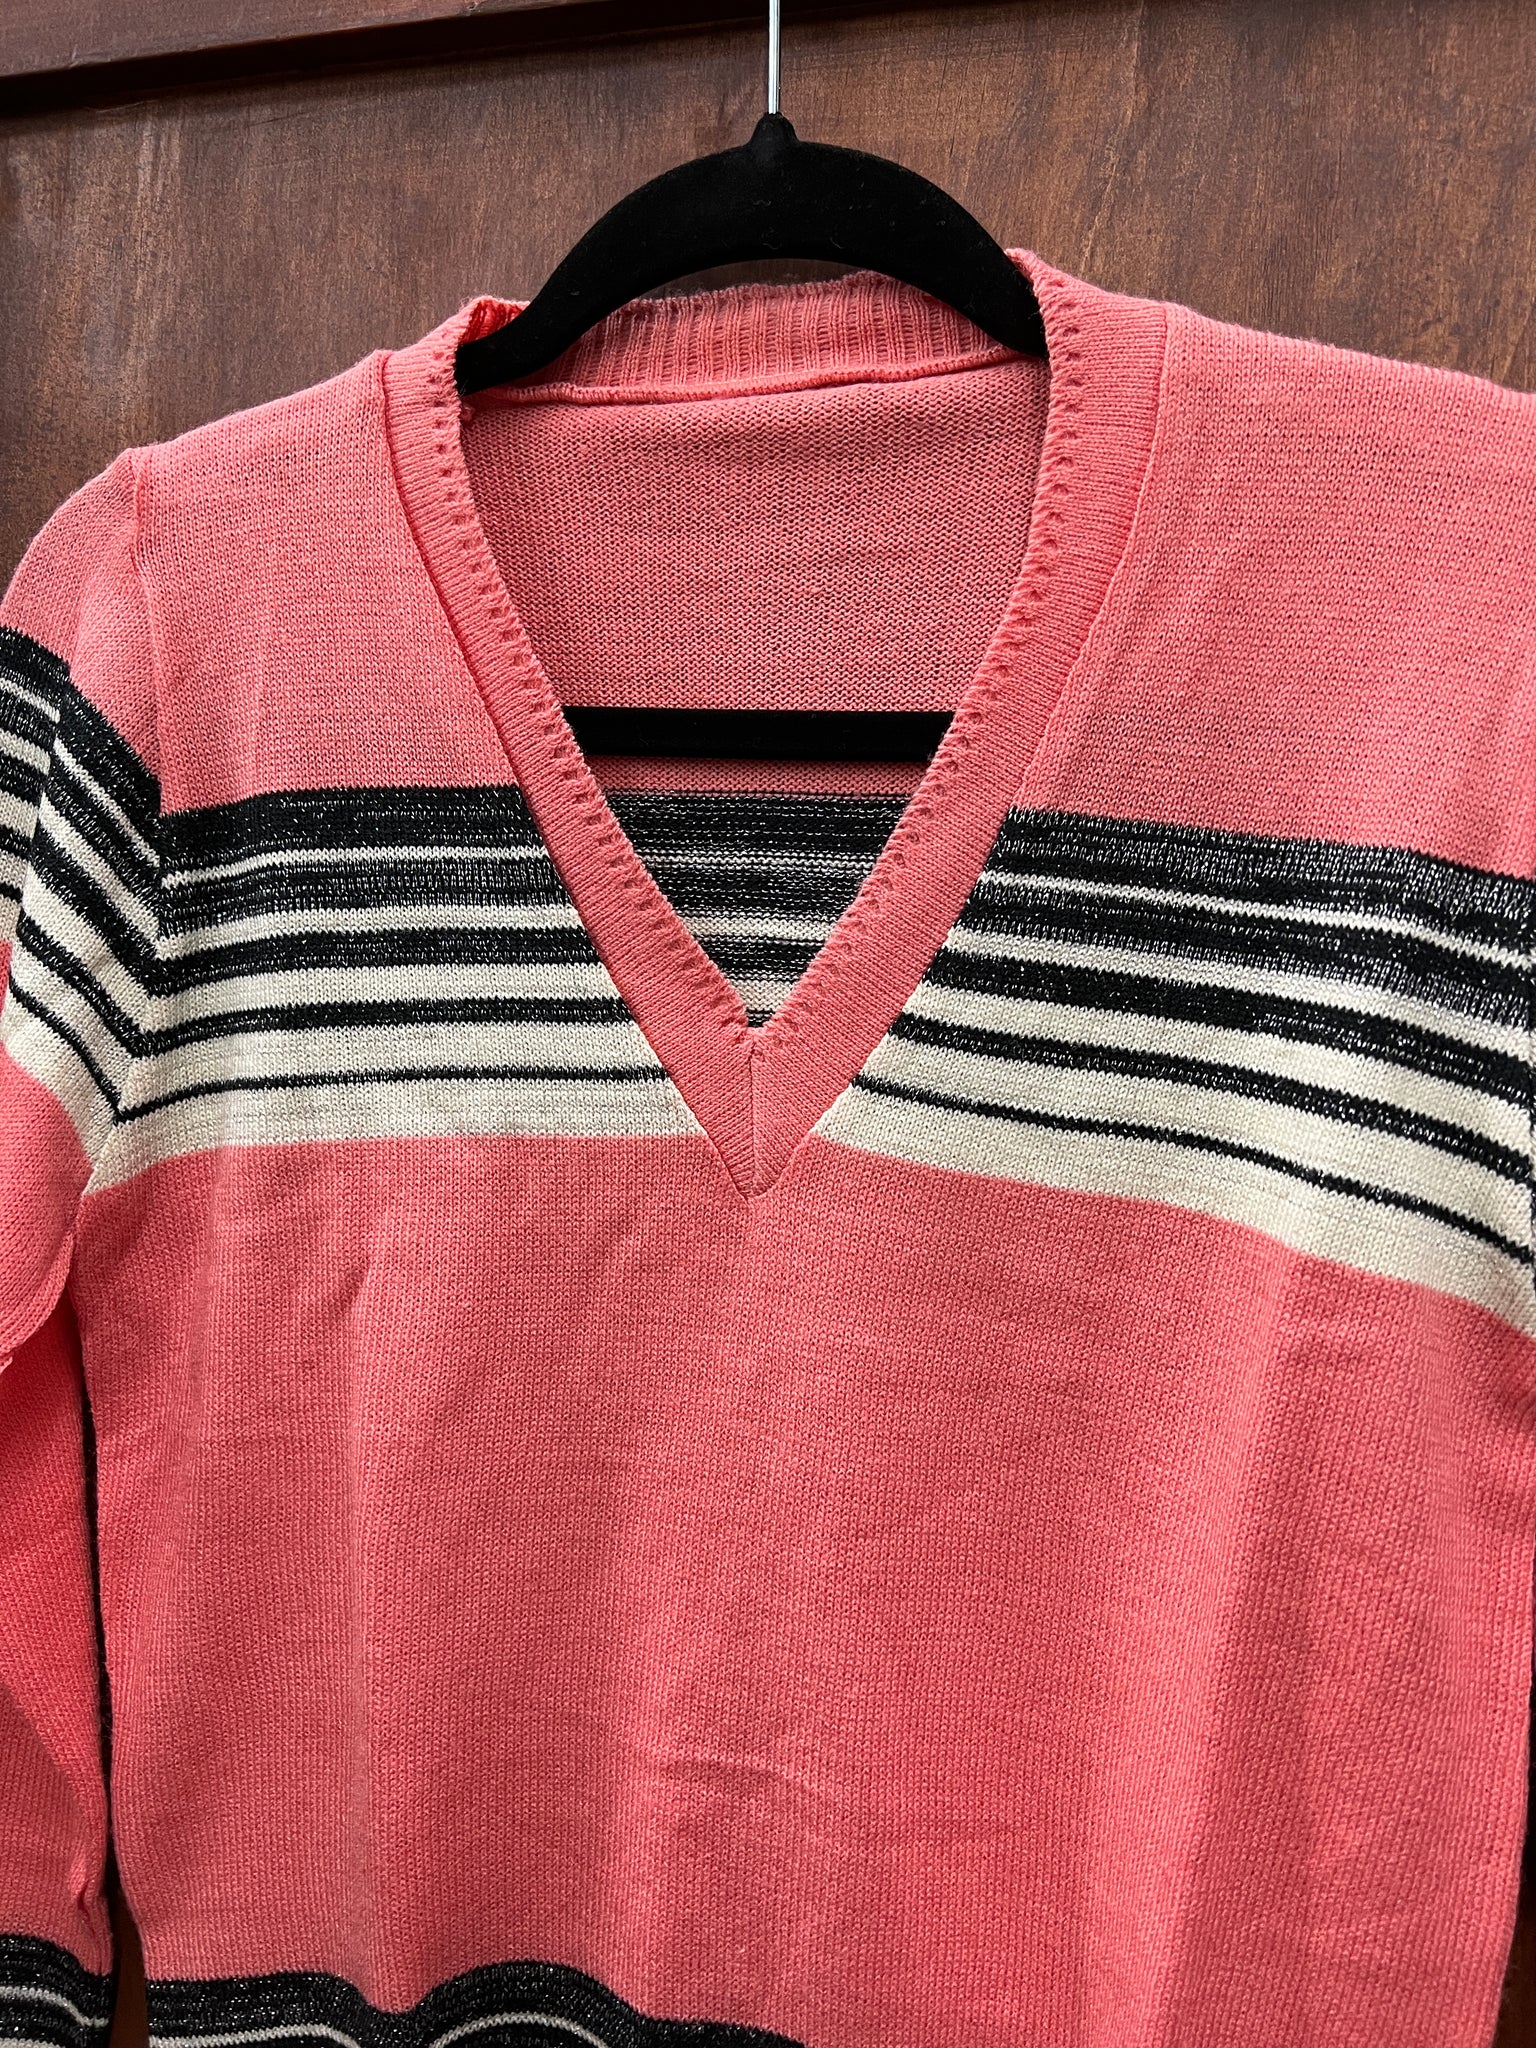 1970s-SWEATER- pink/ black&white stripe v-neck